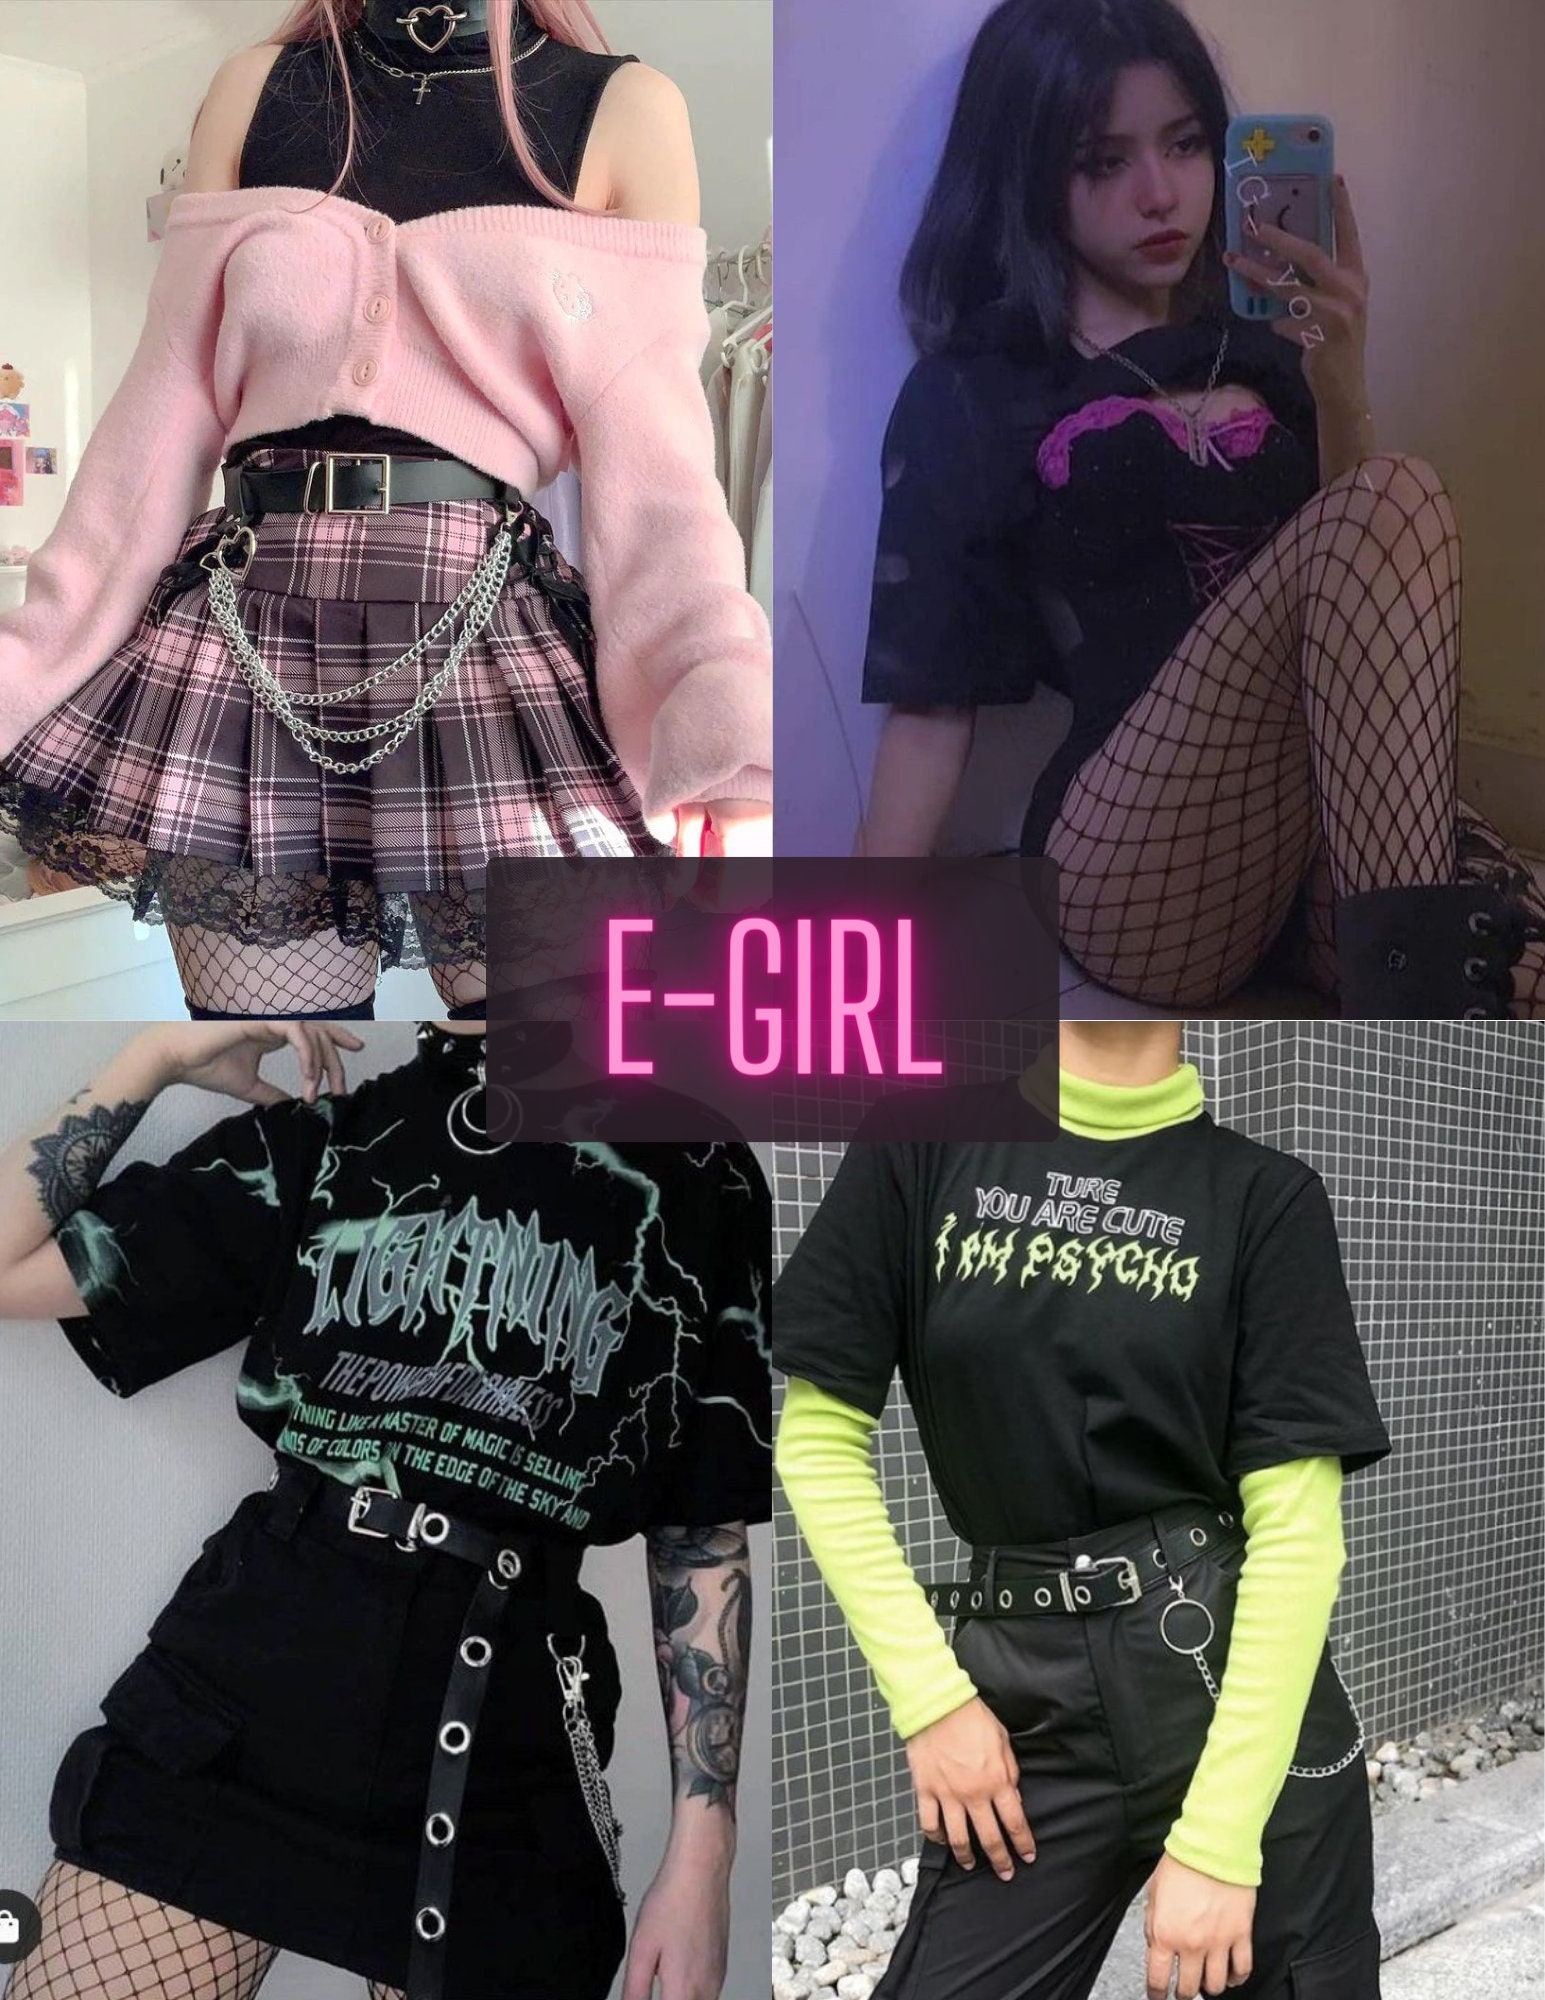 Gothic Aesthetic Cute Graphic Women Panties Black High Waist Grunge Style  Emo Briefs Underwear egirl Fashion Alt Panty